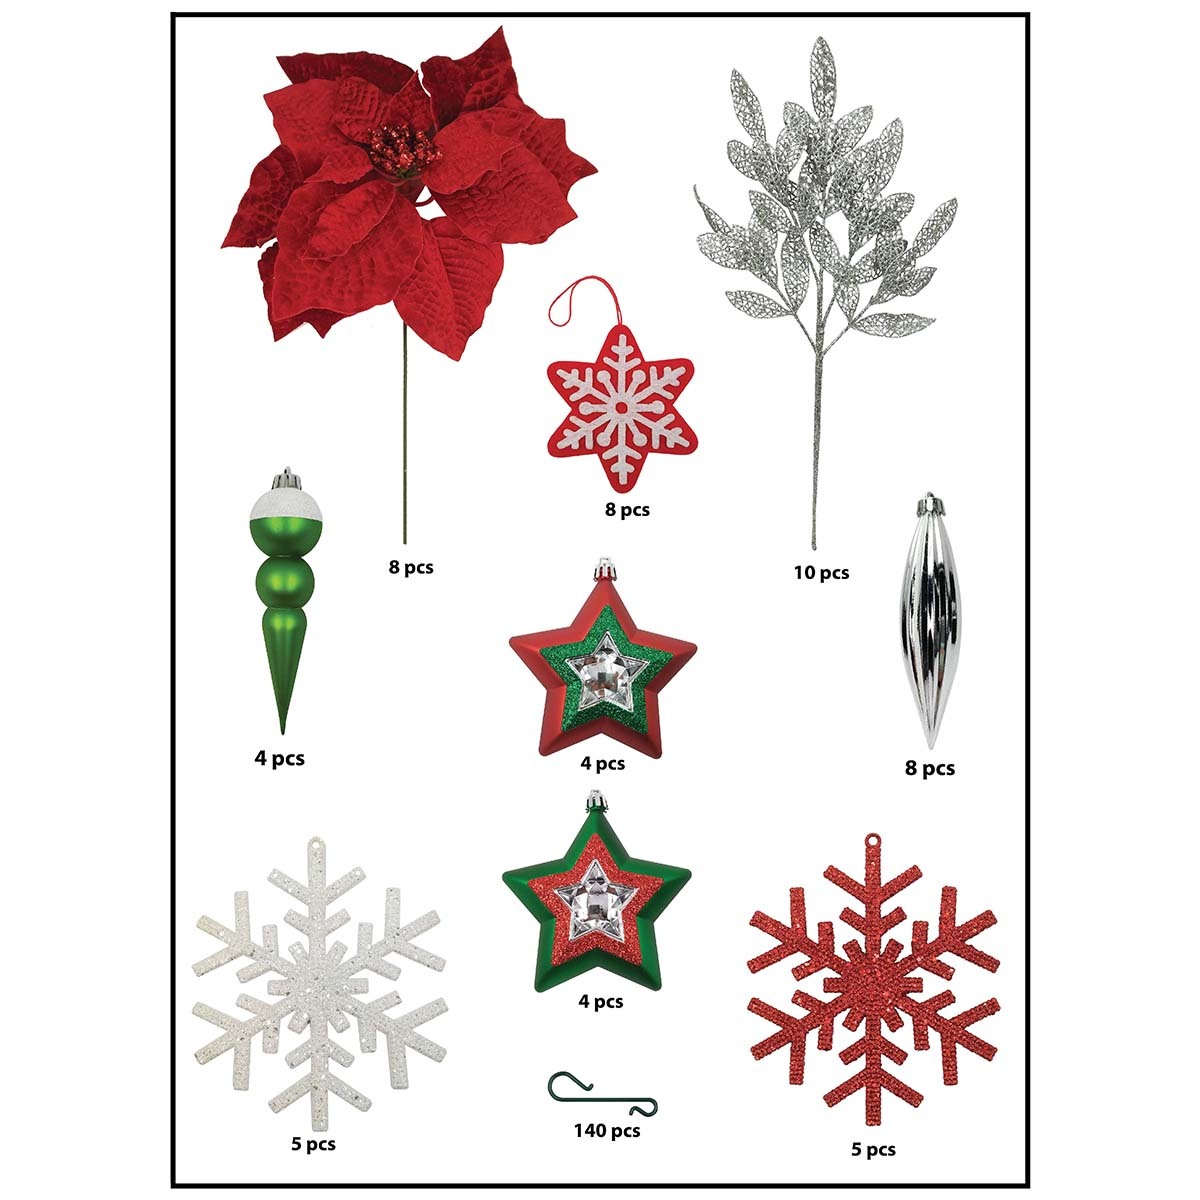 ornament kit variety set on white background